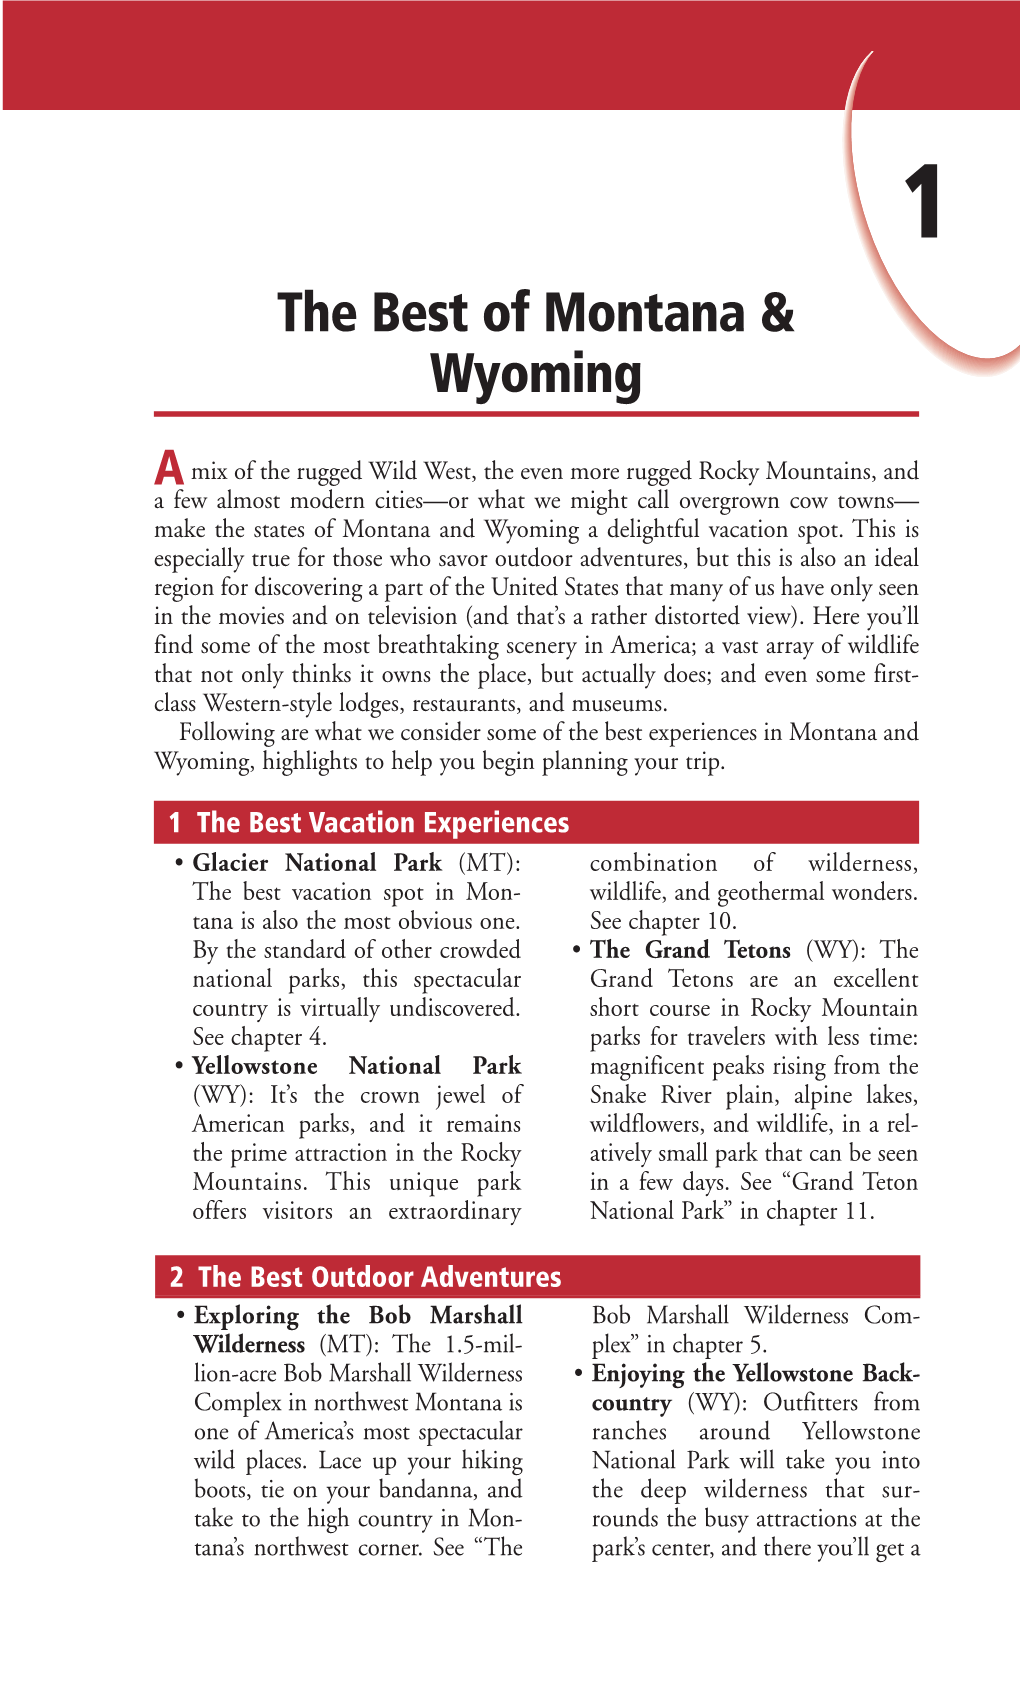 The Best of Montana & Wyoming